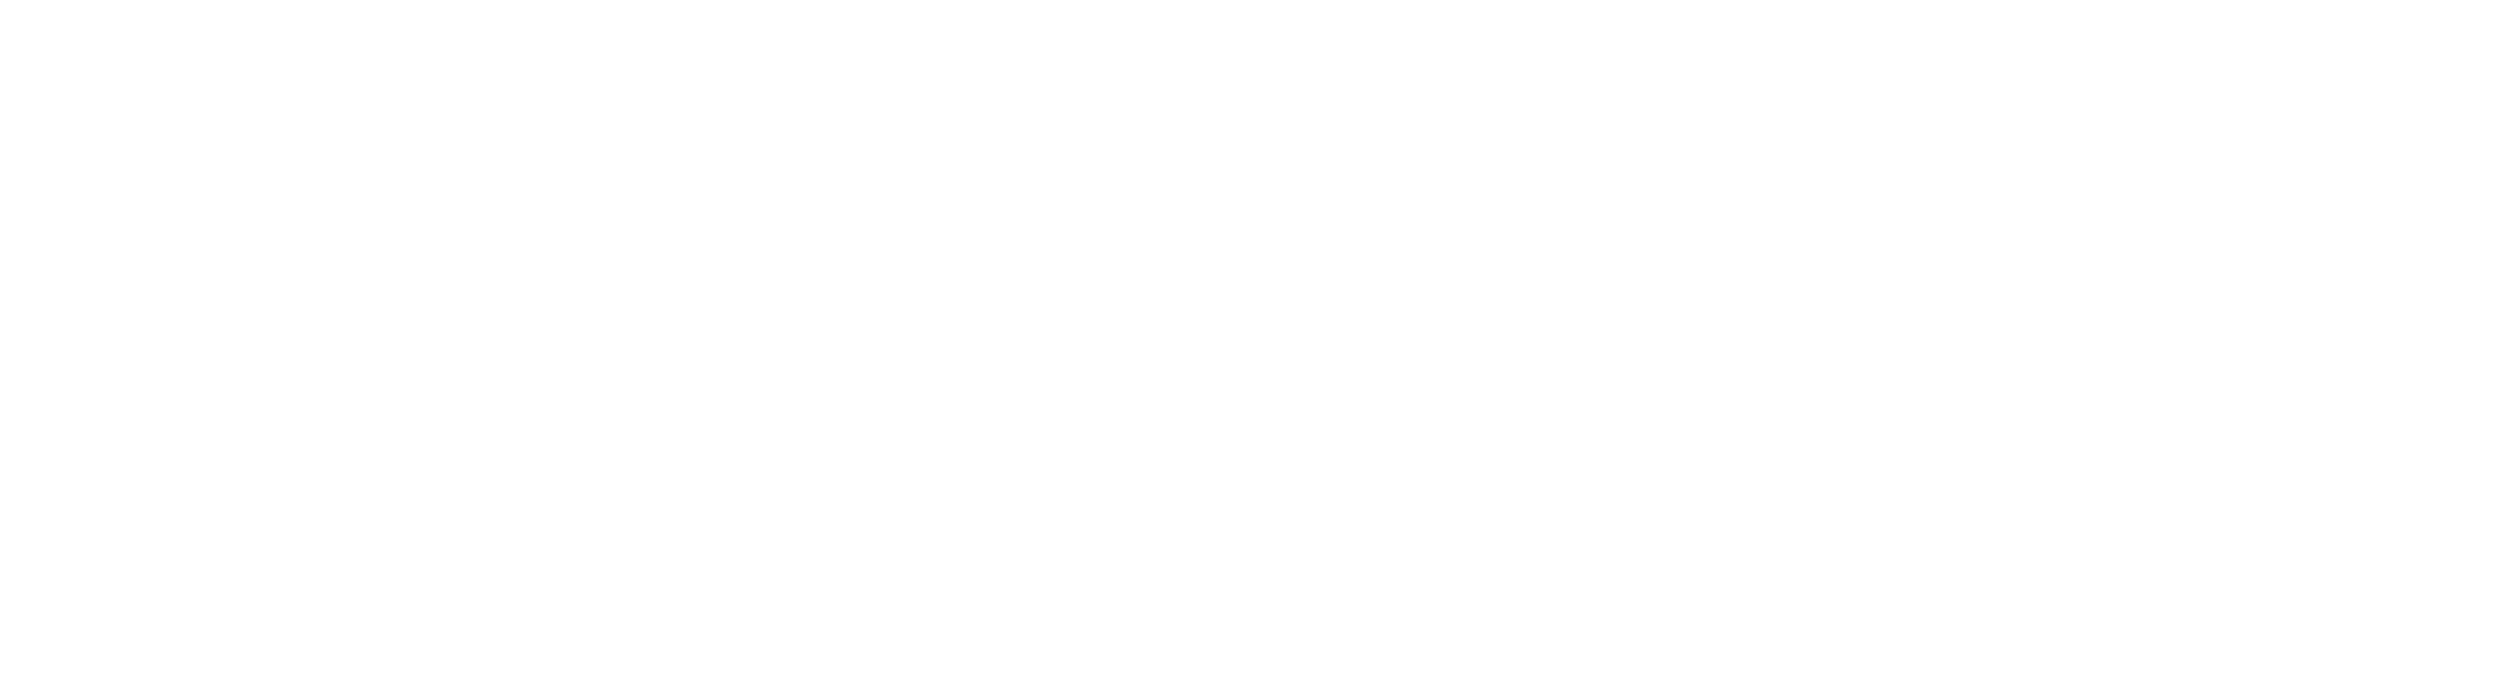 eShipping, The Preferred Logistics Partner Of FPSA